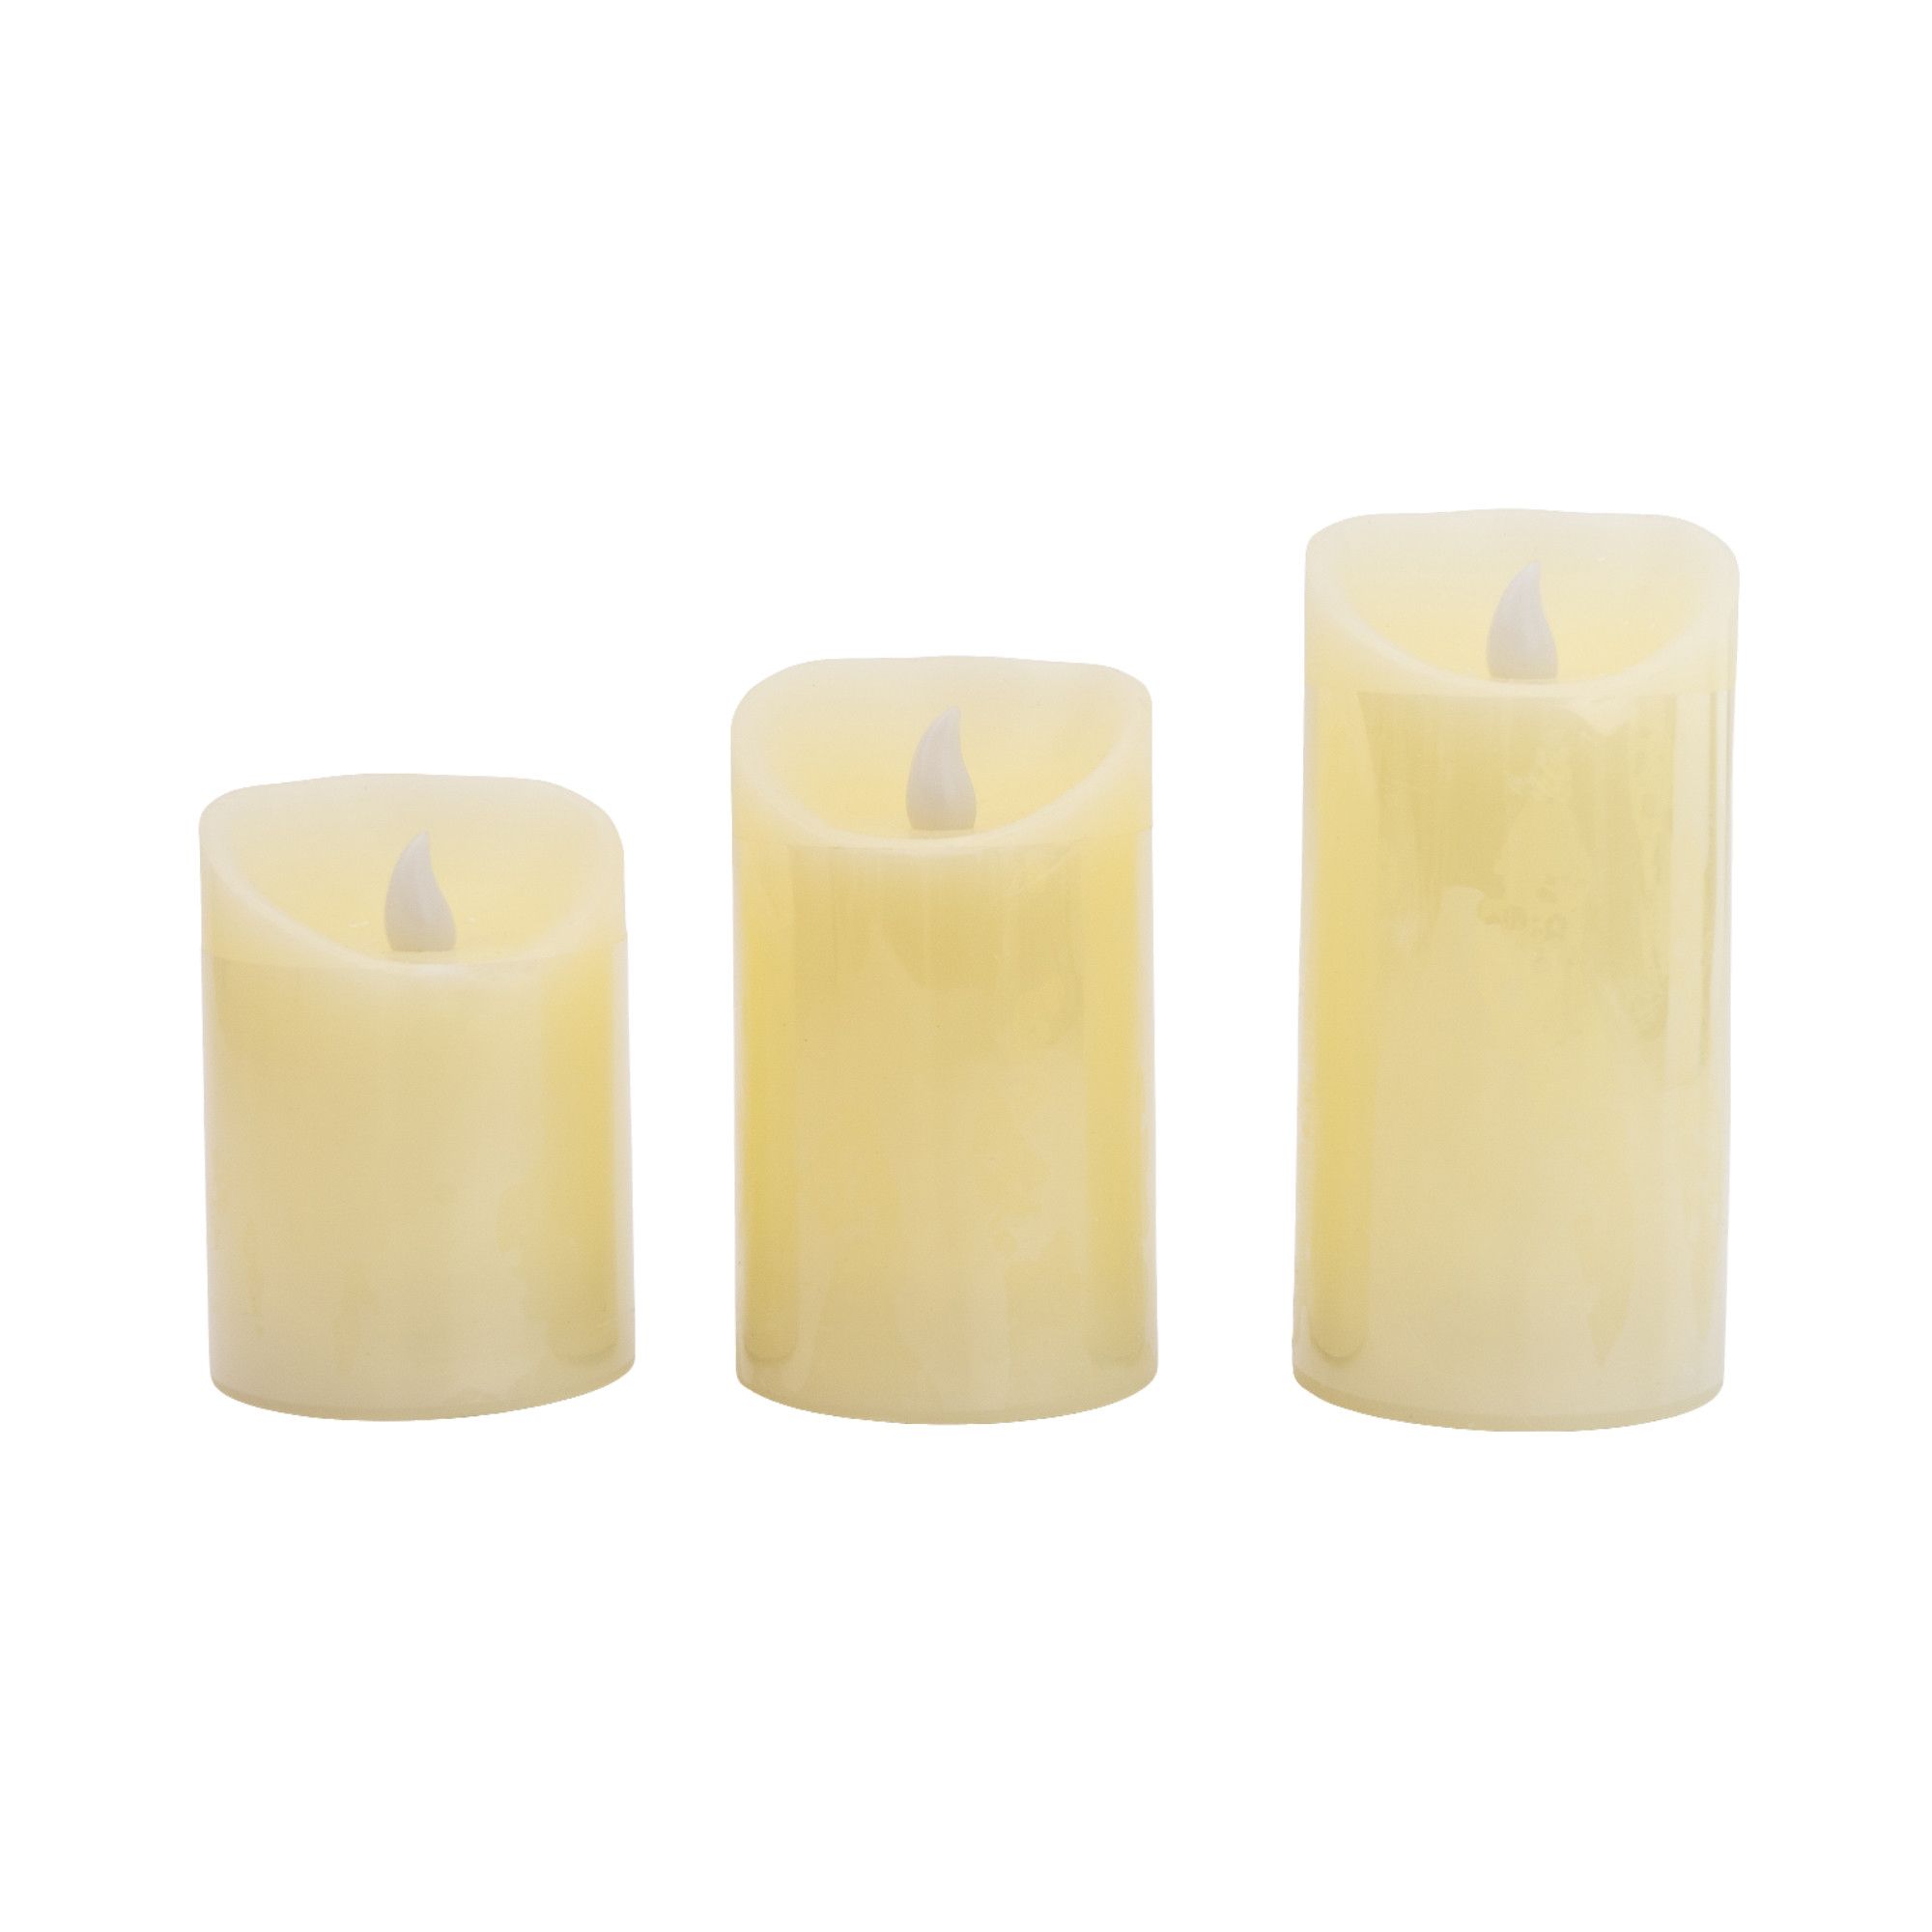 Candlelight Small LED pillar candle